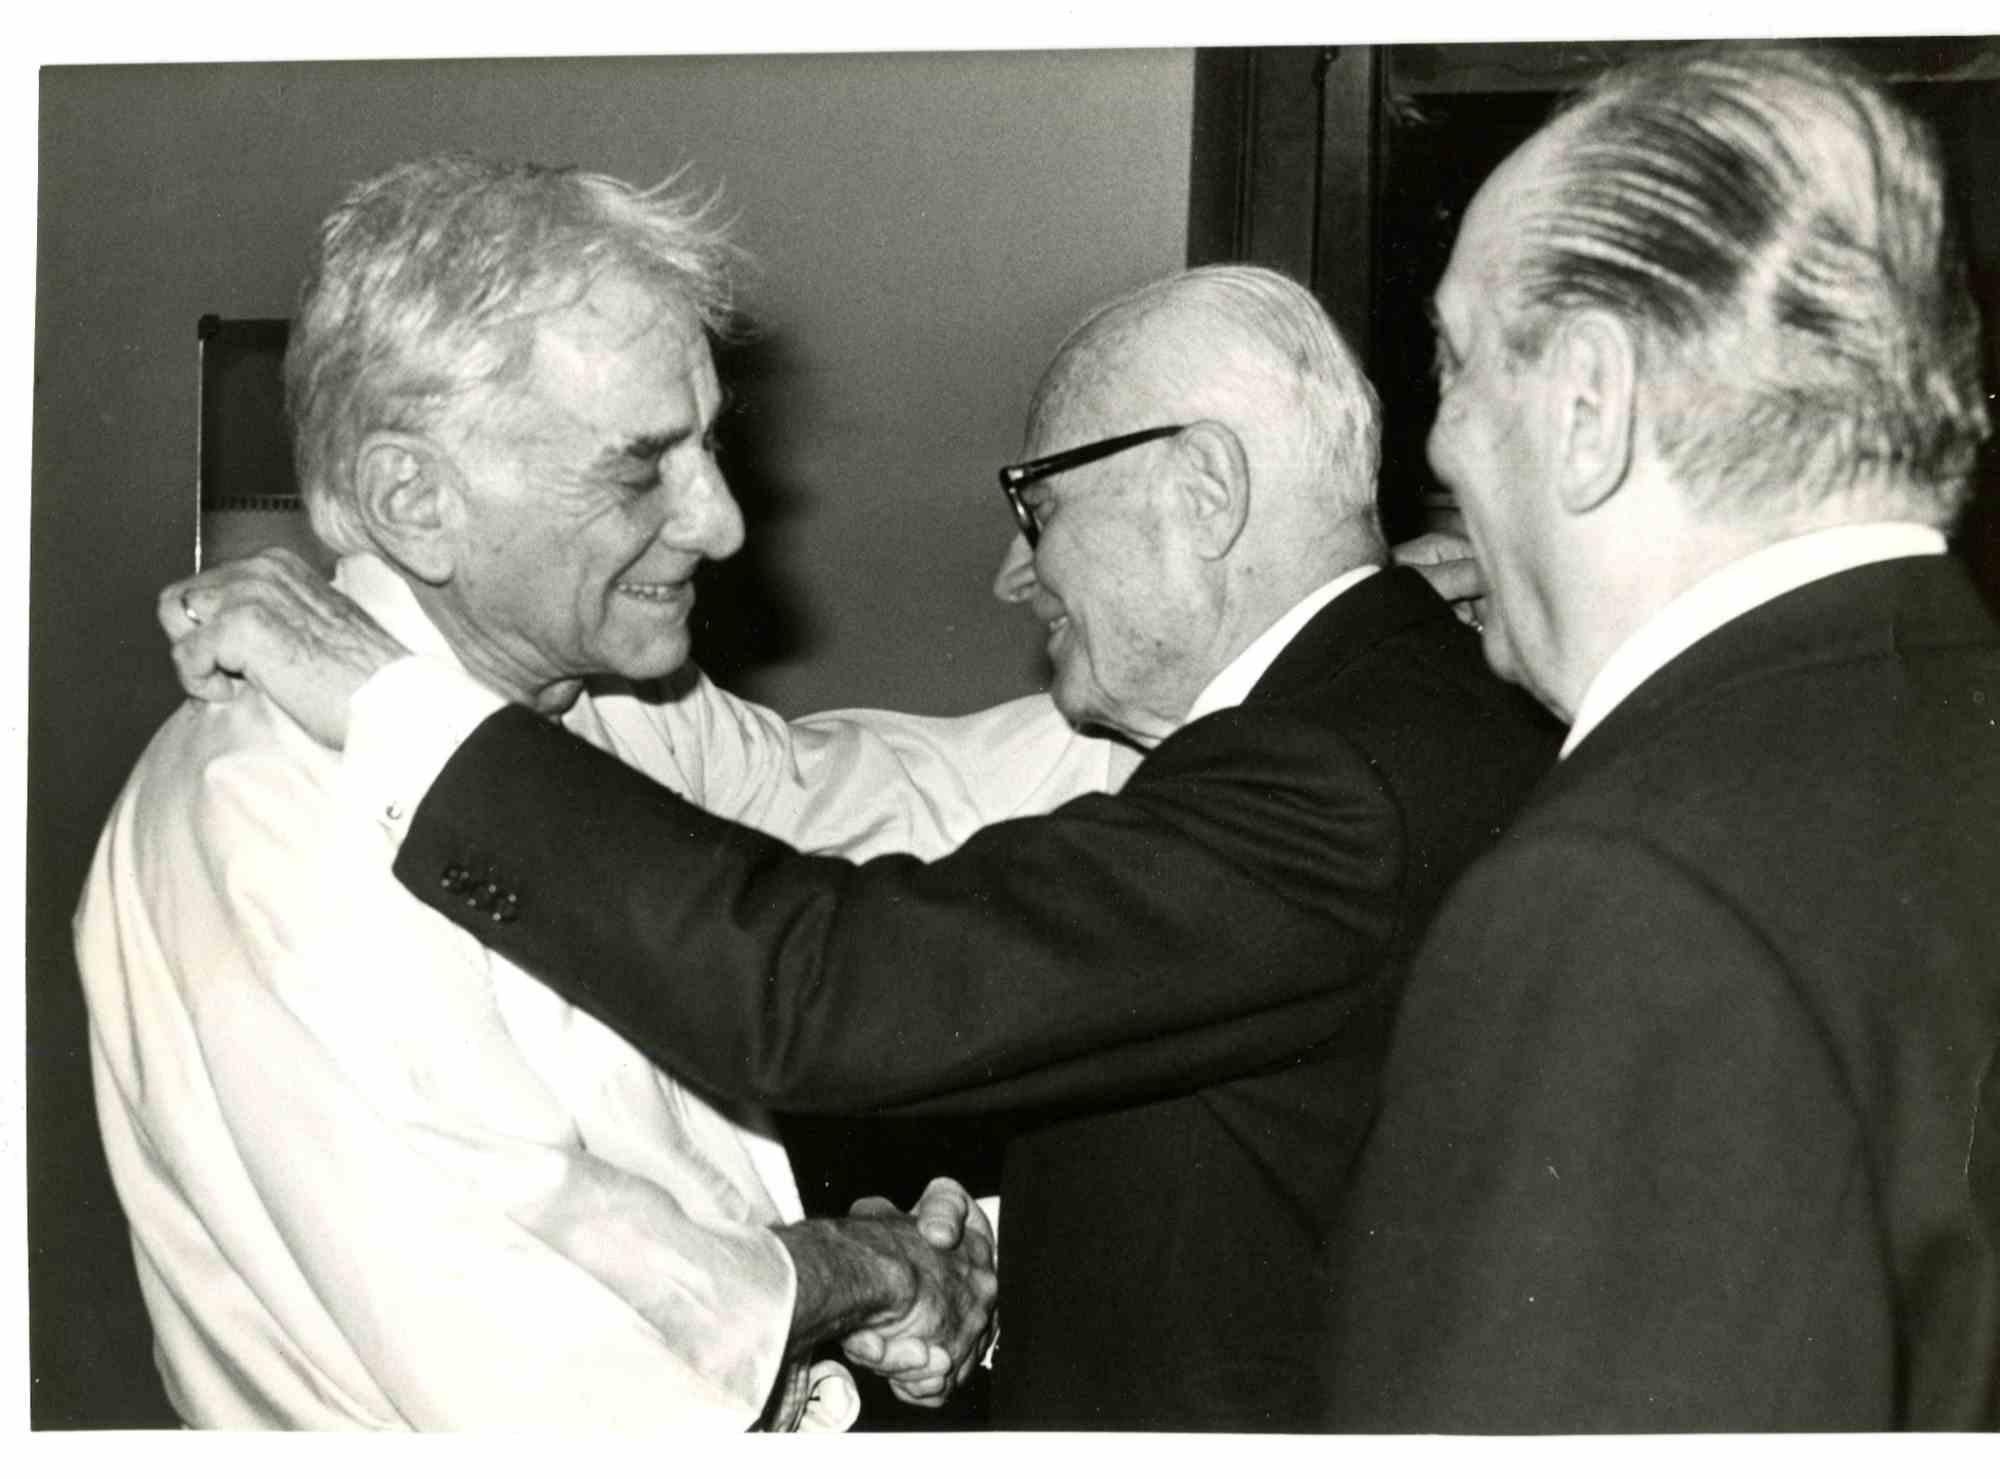 Unknown Portrait Photograph - Leonard Bernstein and Italian President Sandro Pertini- 1980s